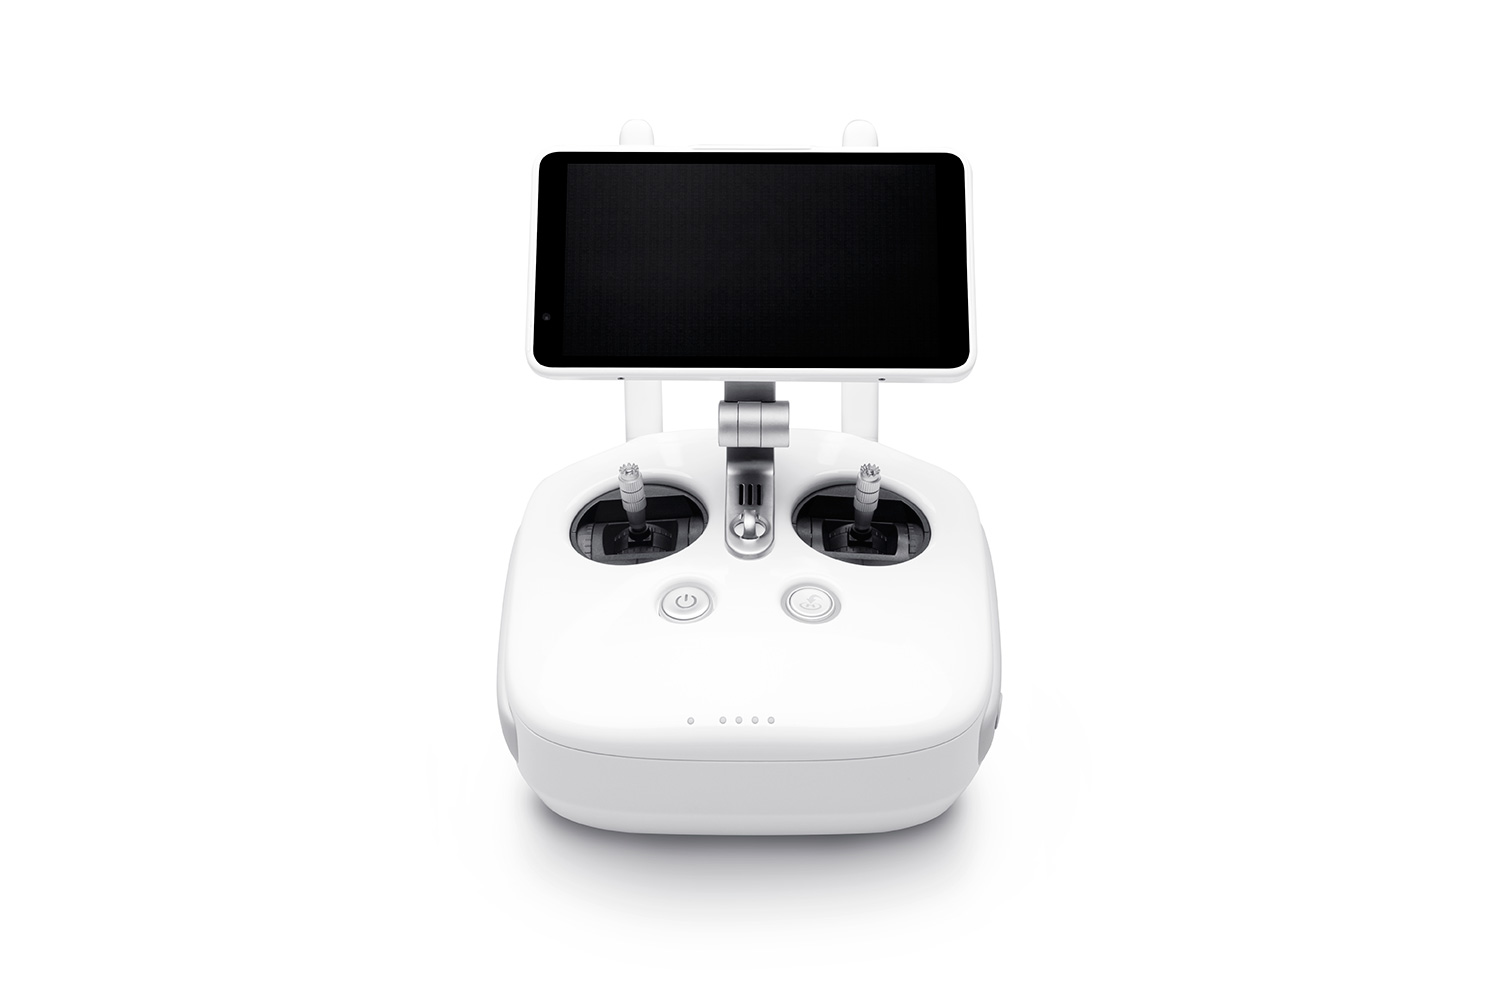 dji inspire 2 phantom 4 pro unveiled remote controller 8